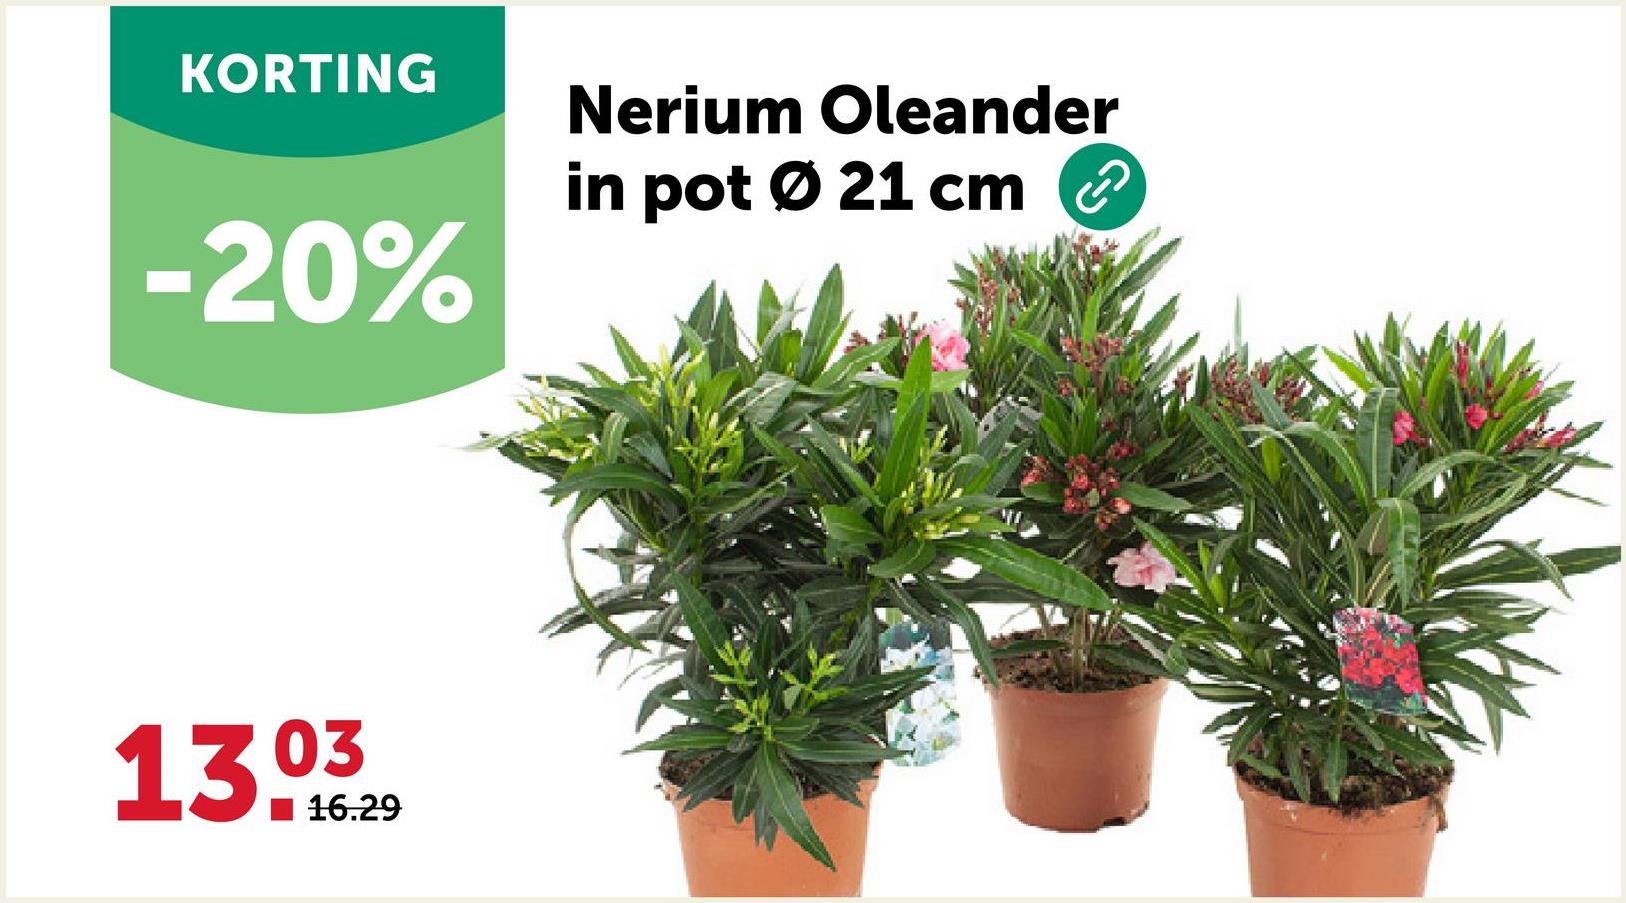 KORTING
-20%
Nerium Oleander
in pot Ø 21 cm
13.03
16.29